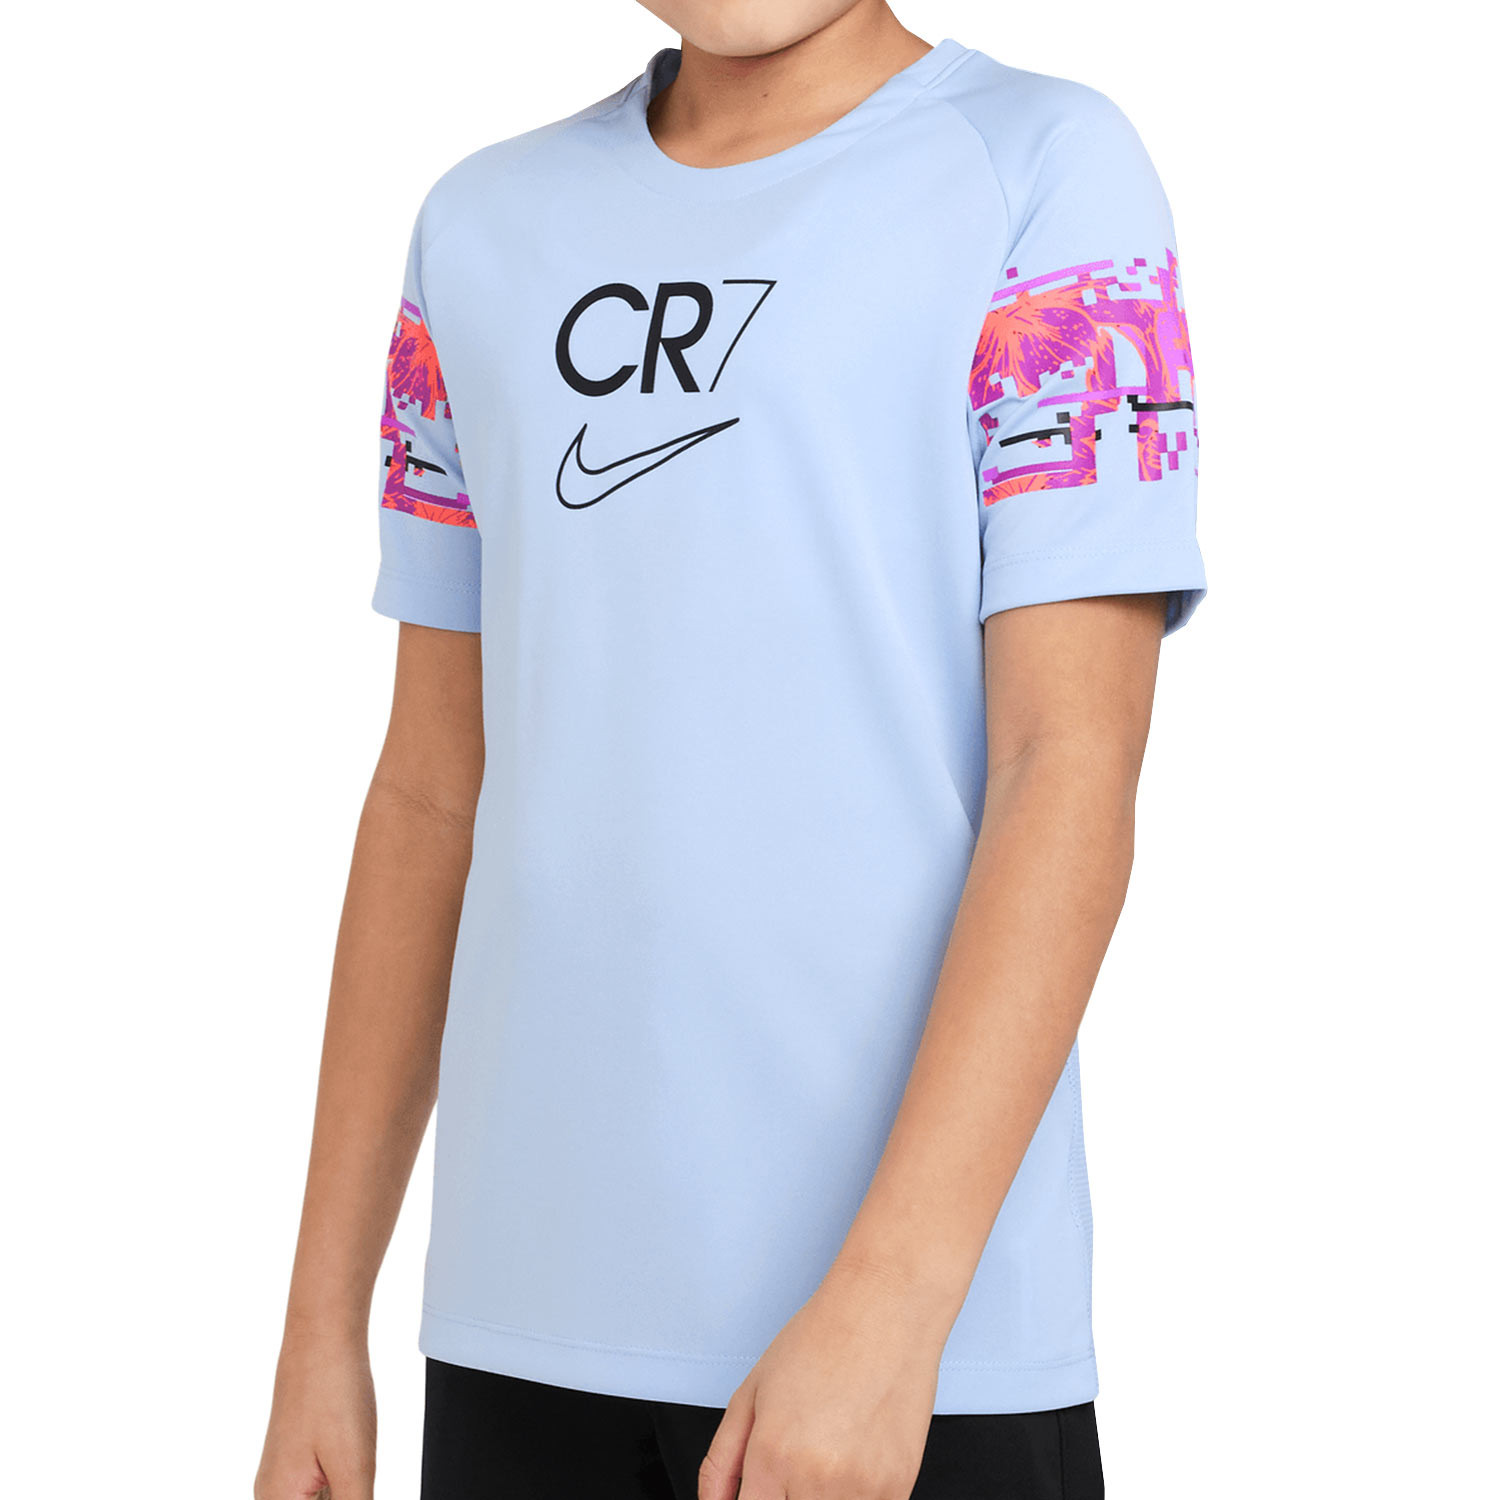 Camiseta CR7 niño azul claro| futbolmaniaKids